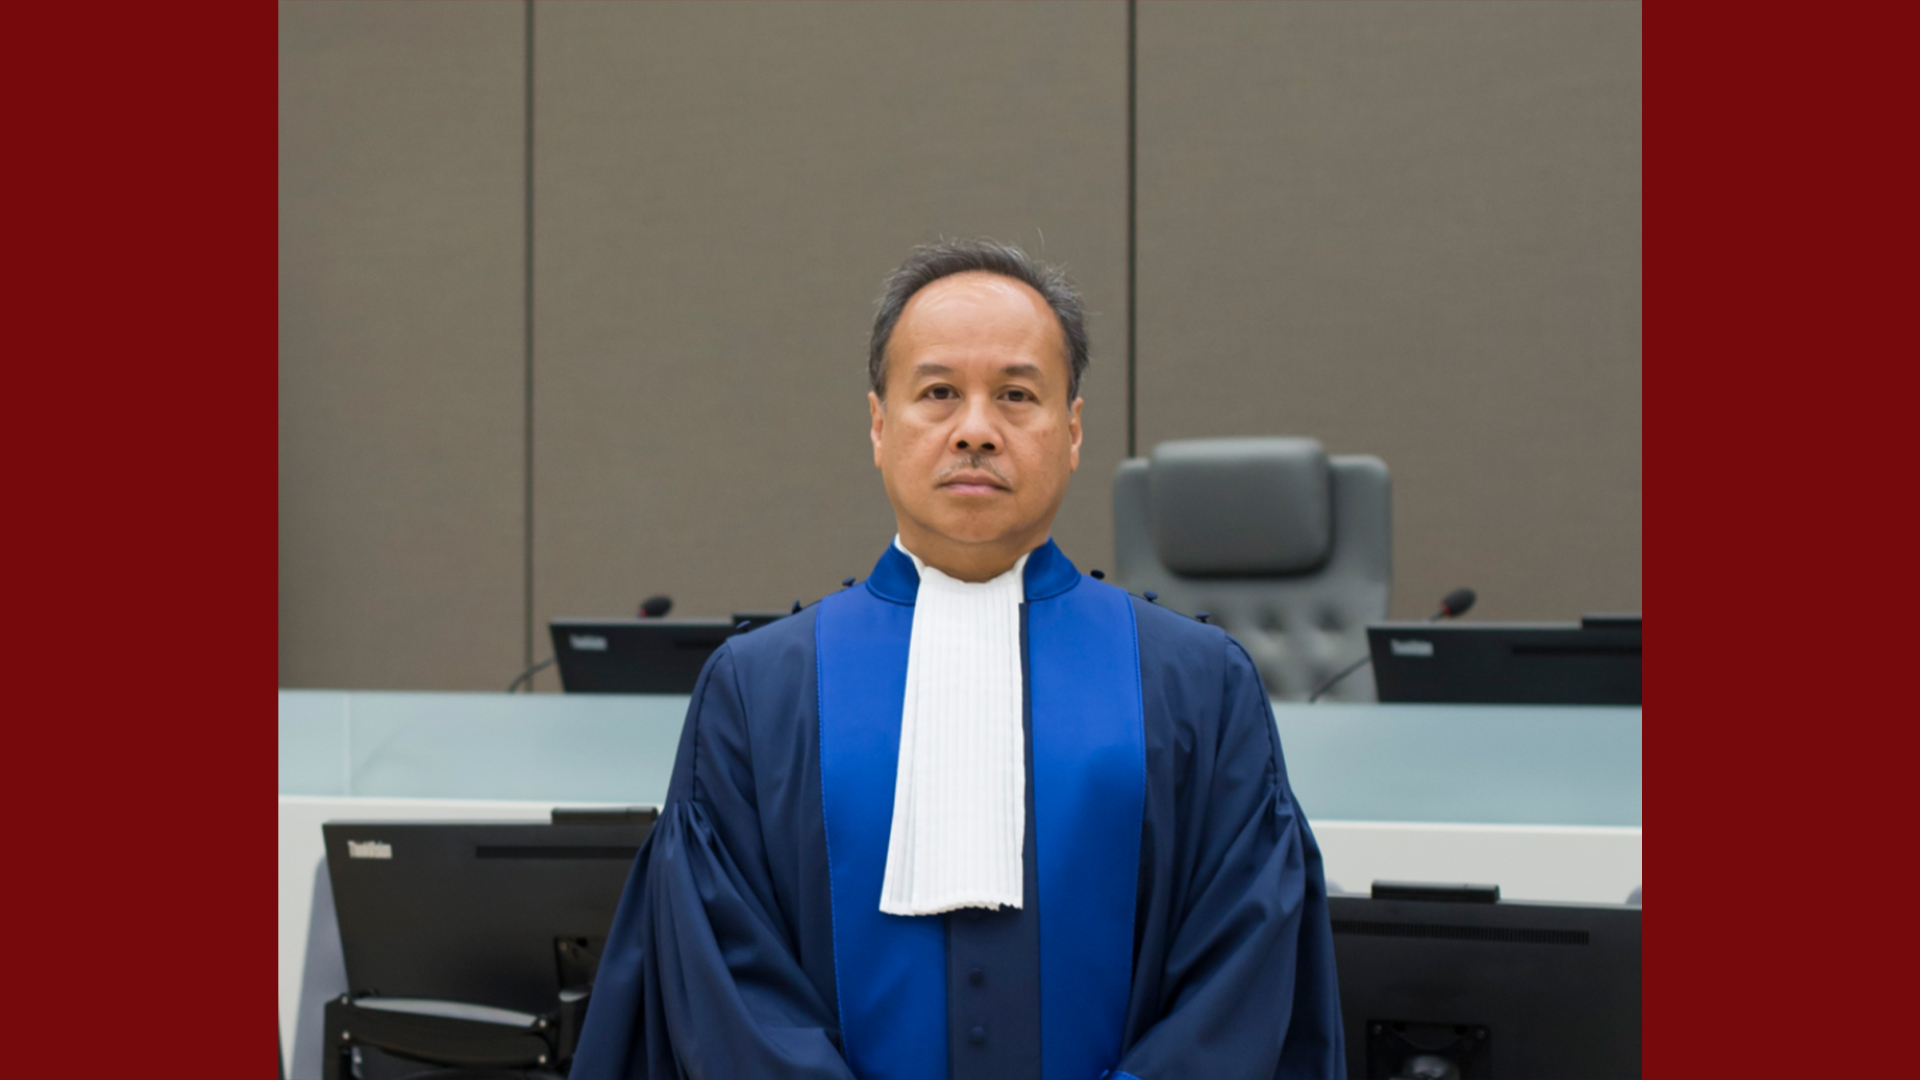 Dean Pangalangan Retires from the International Criminal Court